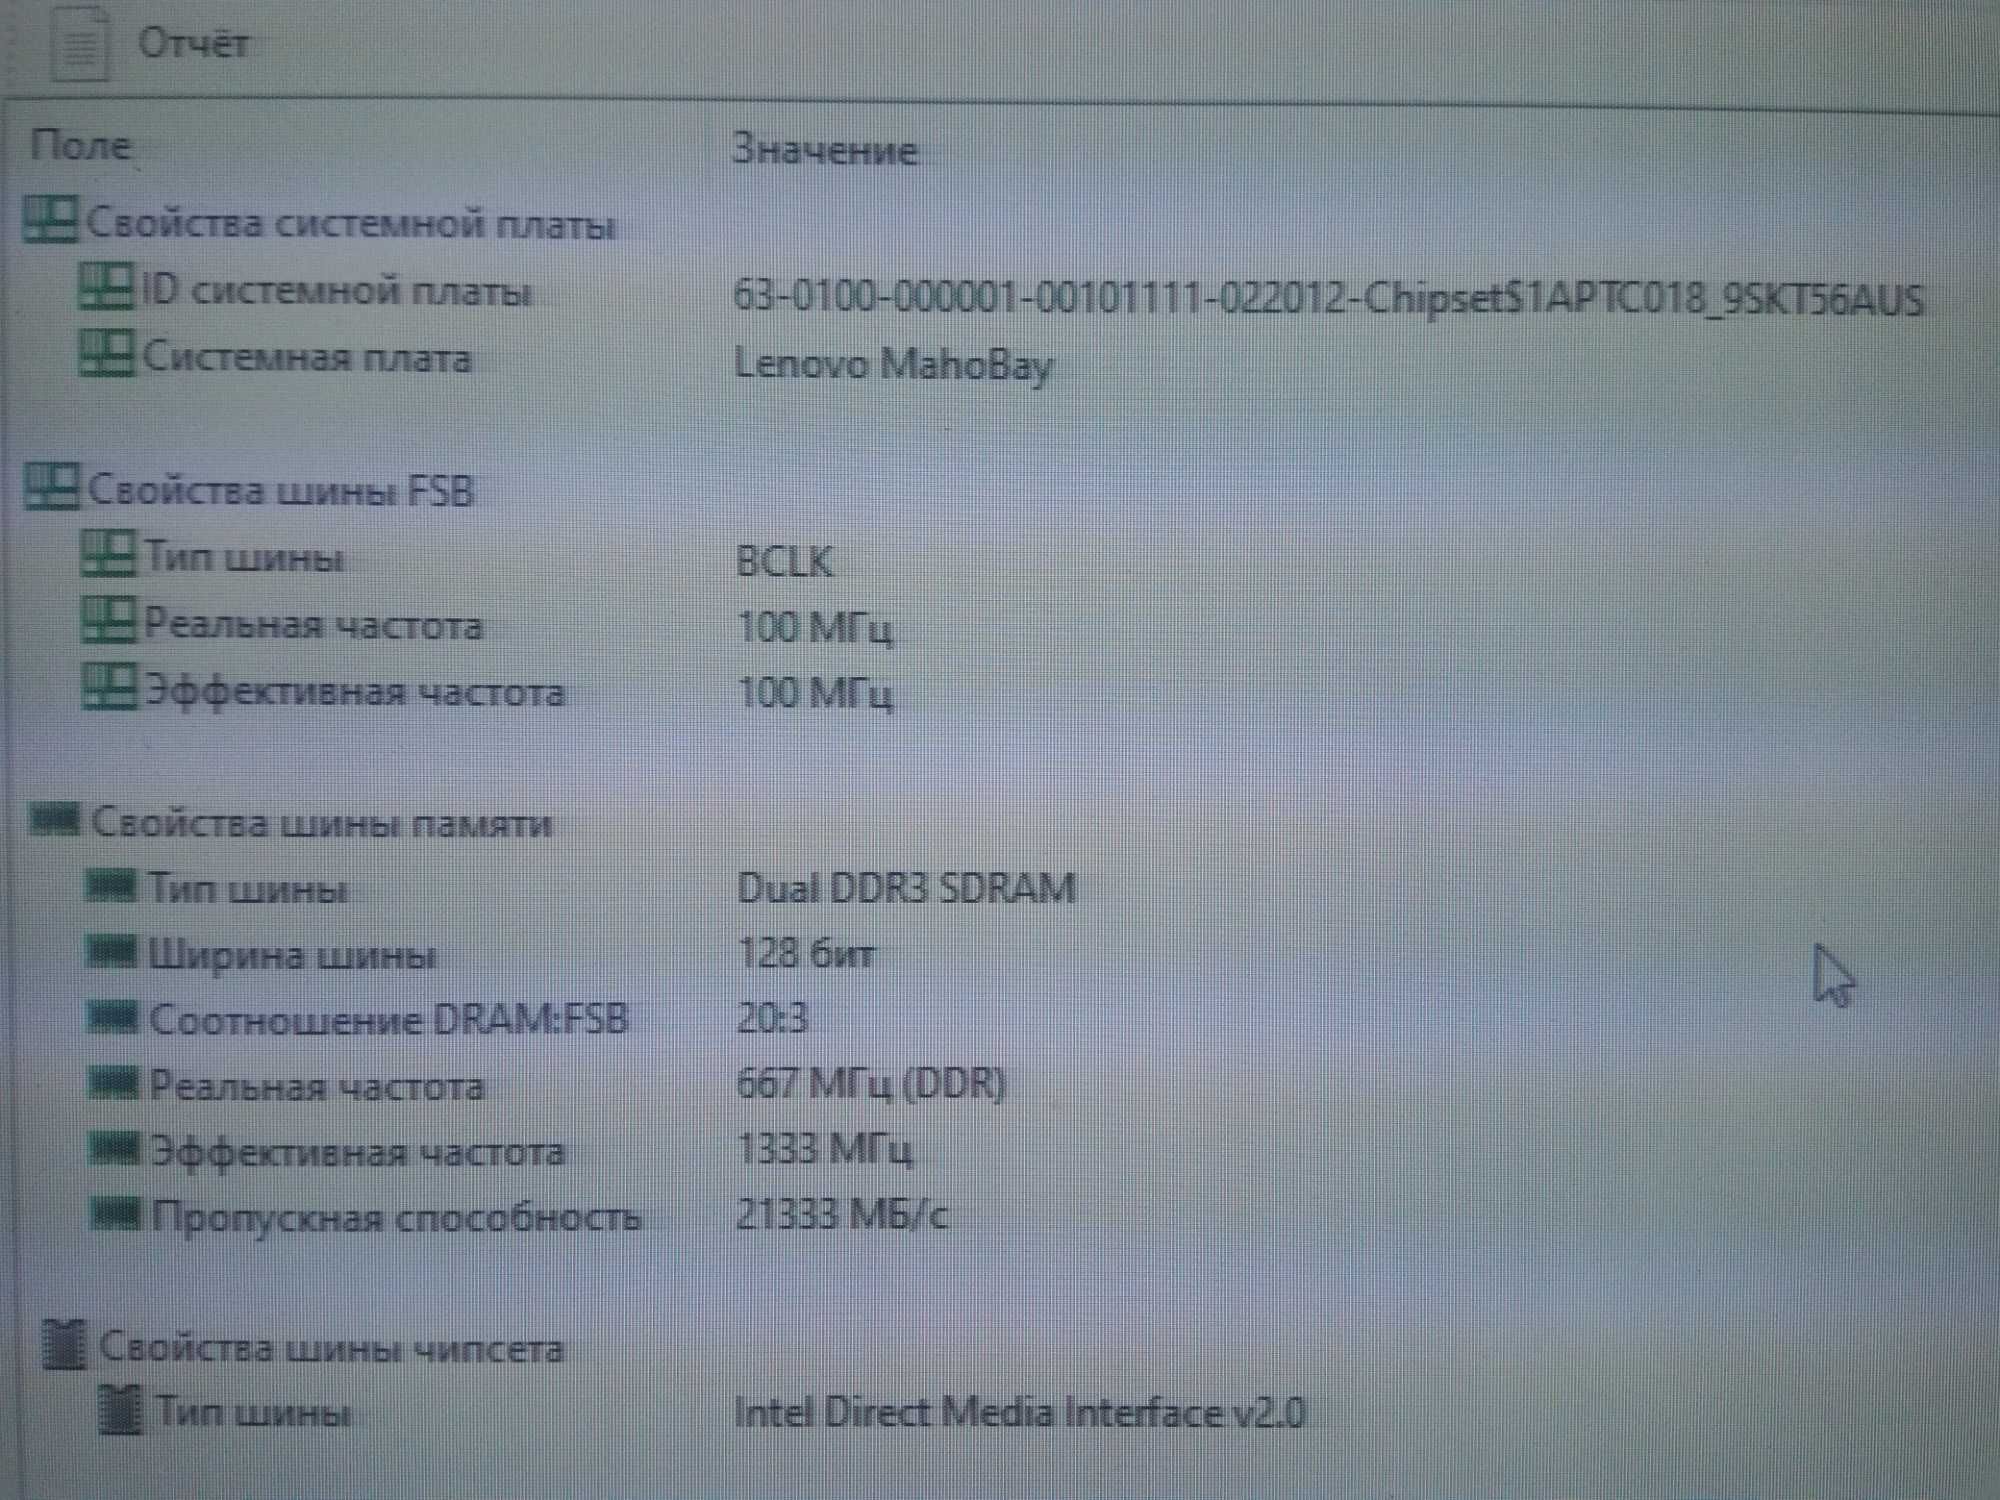 Lenovo IS7XM  ThinkCentre Edge 92 / M82  s1155